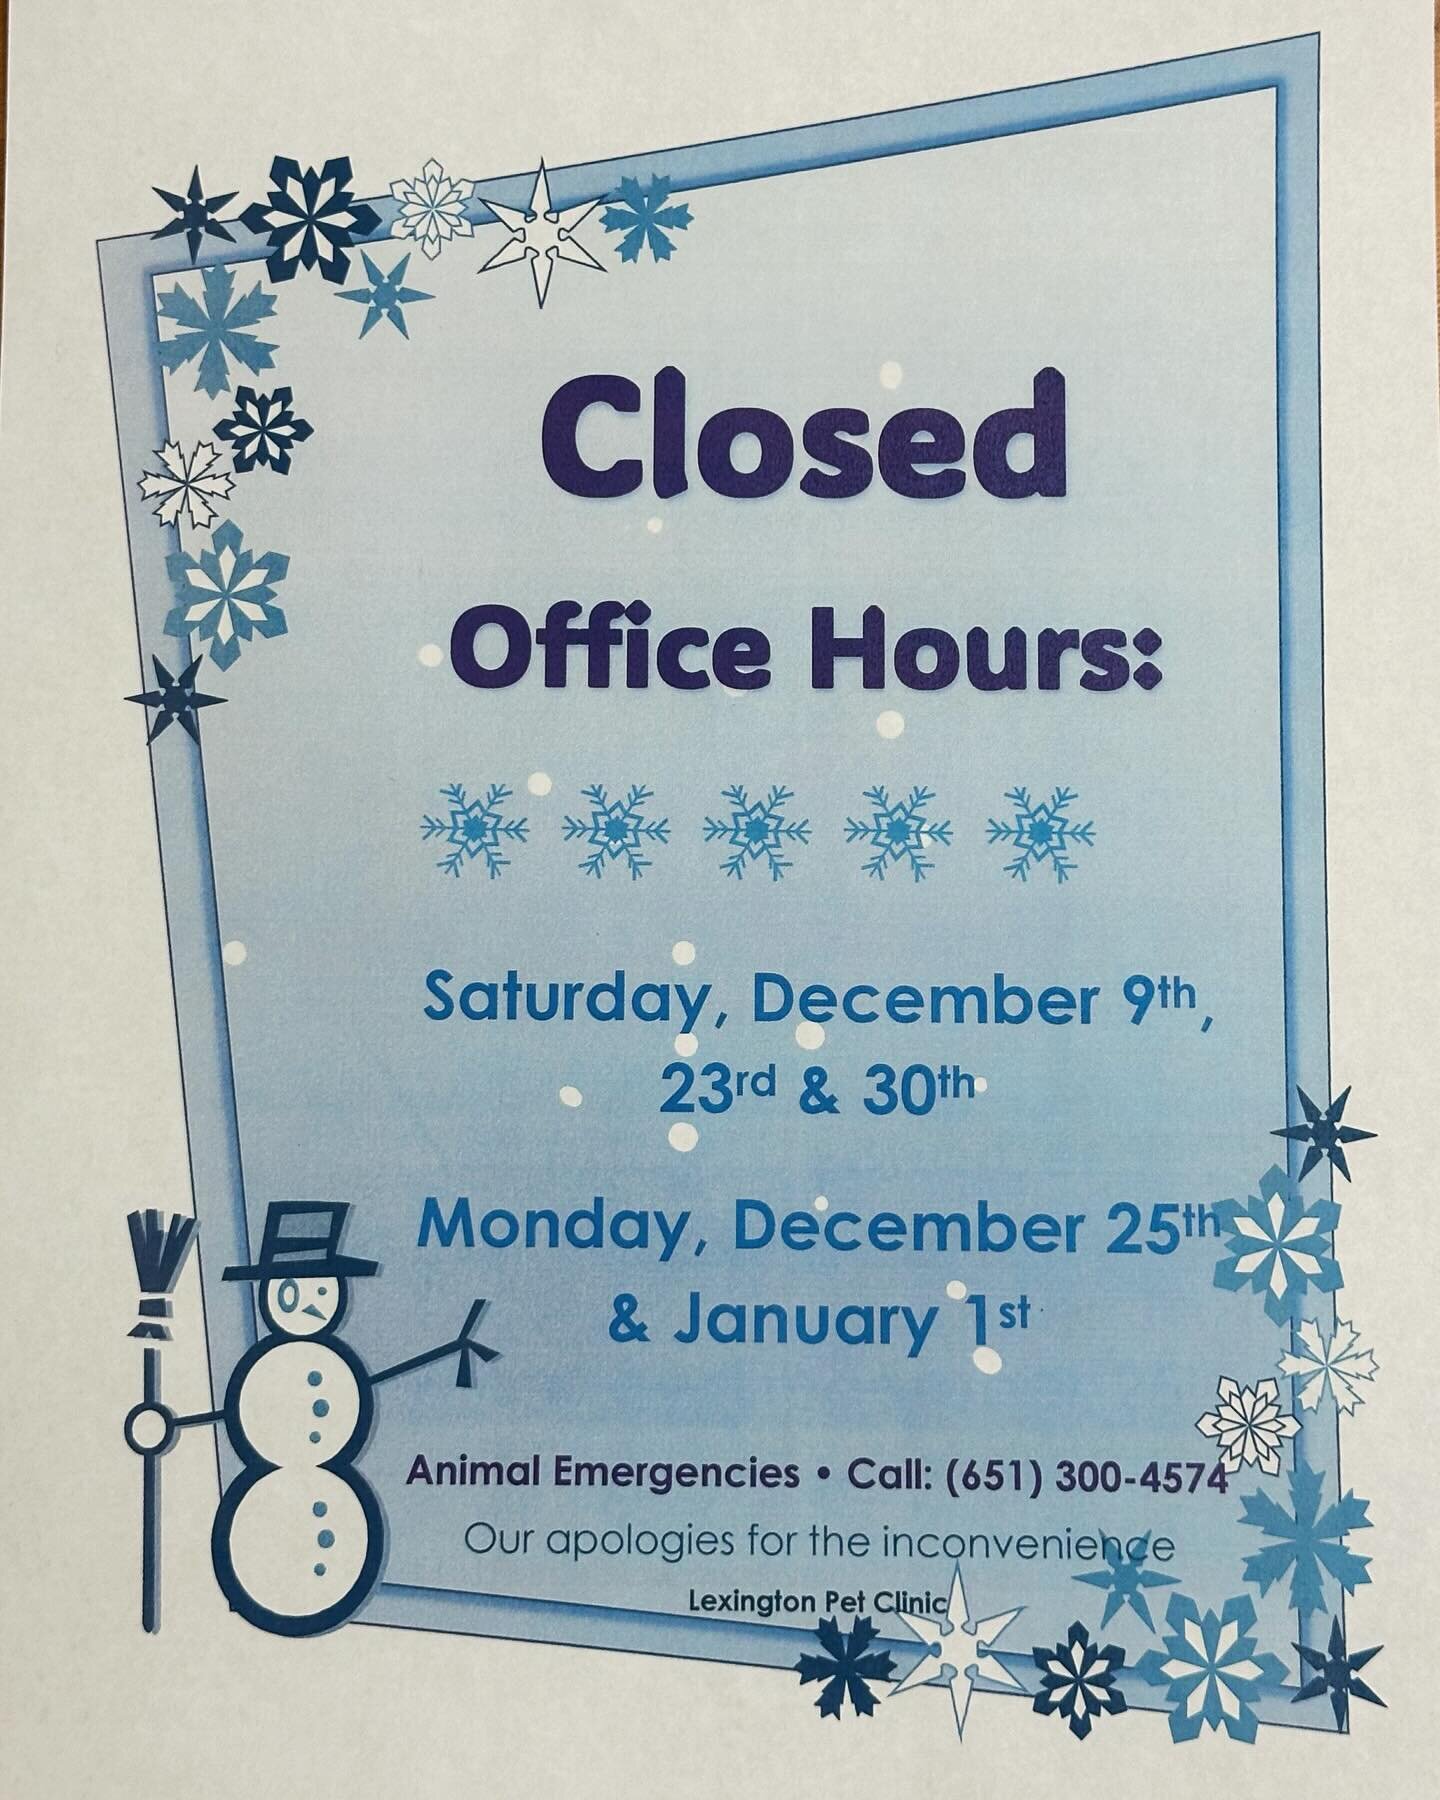 ❄️ Winter Office Closures ❄️